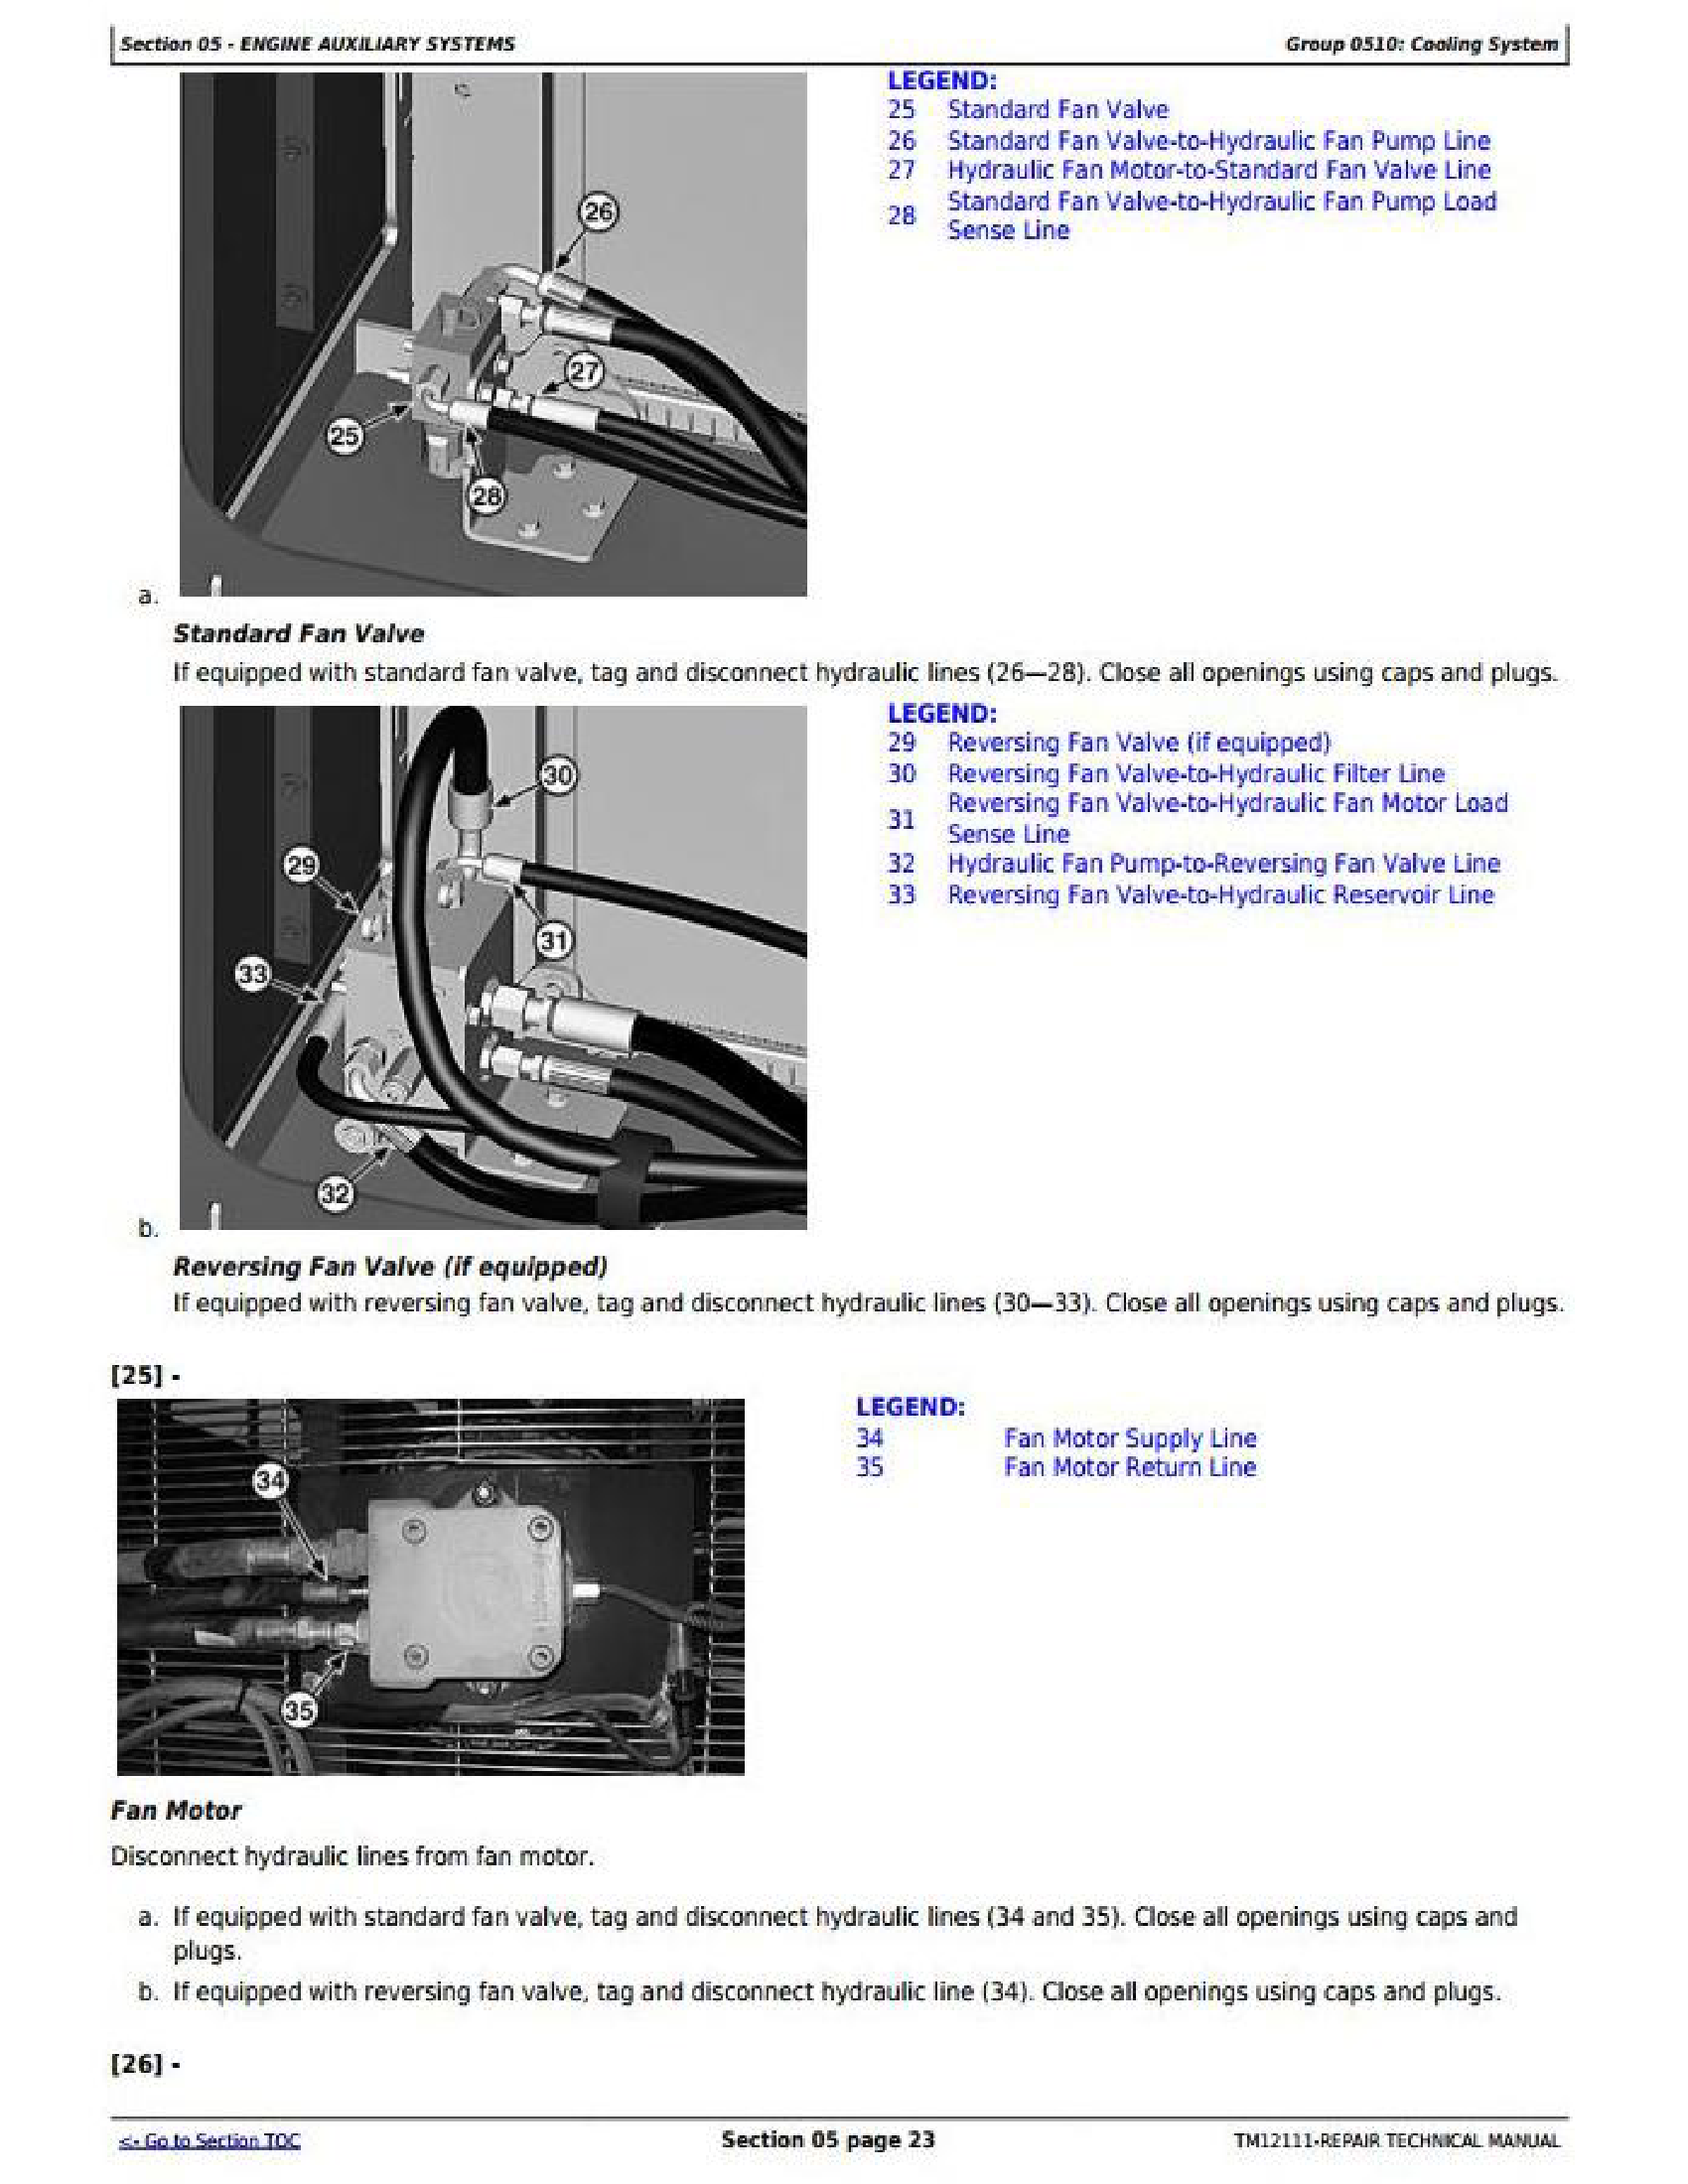 John Deere D450 manual pdf